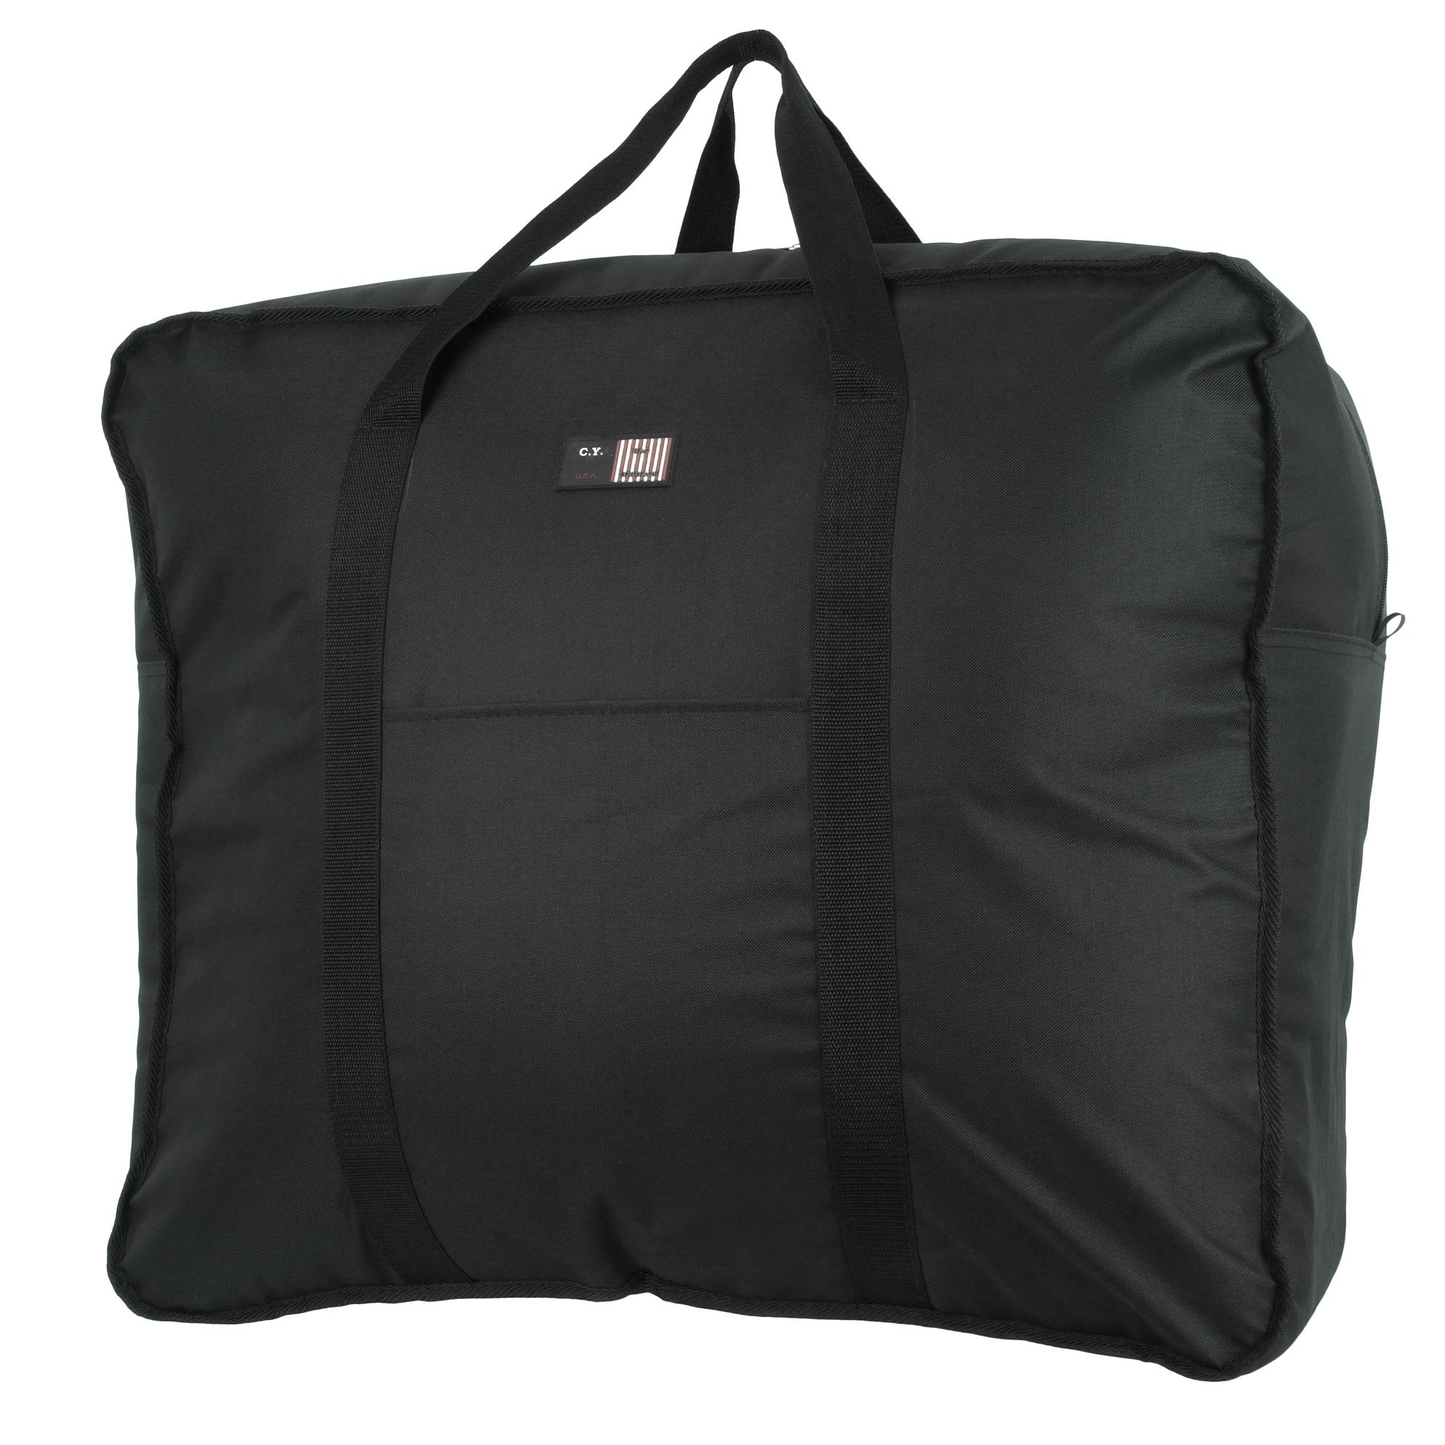 #19 - Square Duffel Bag (40lbs) (22")